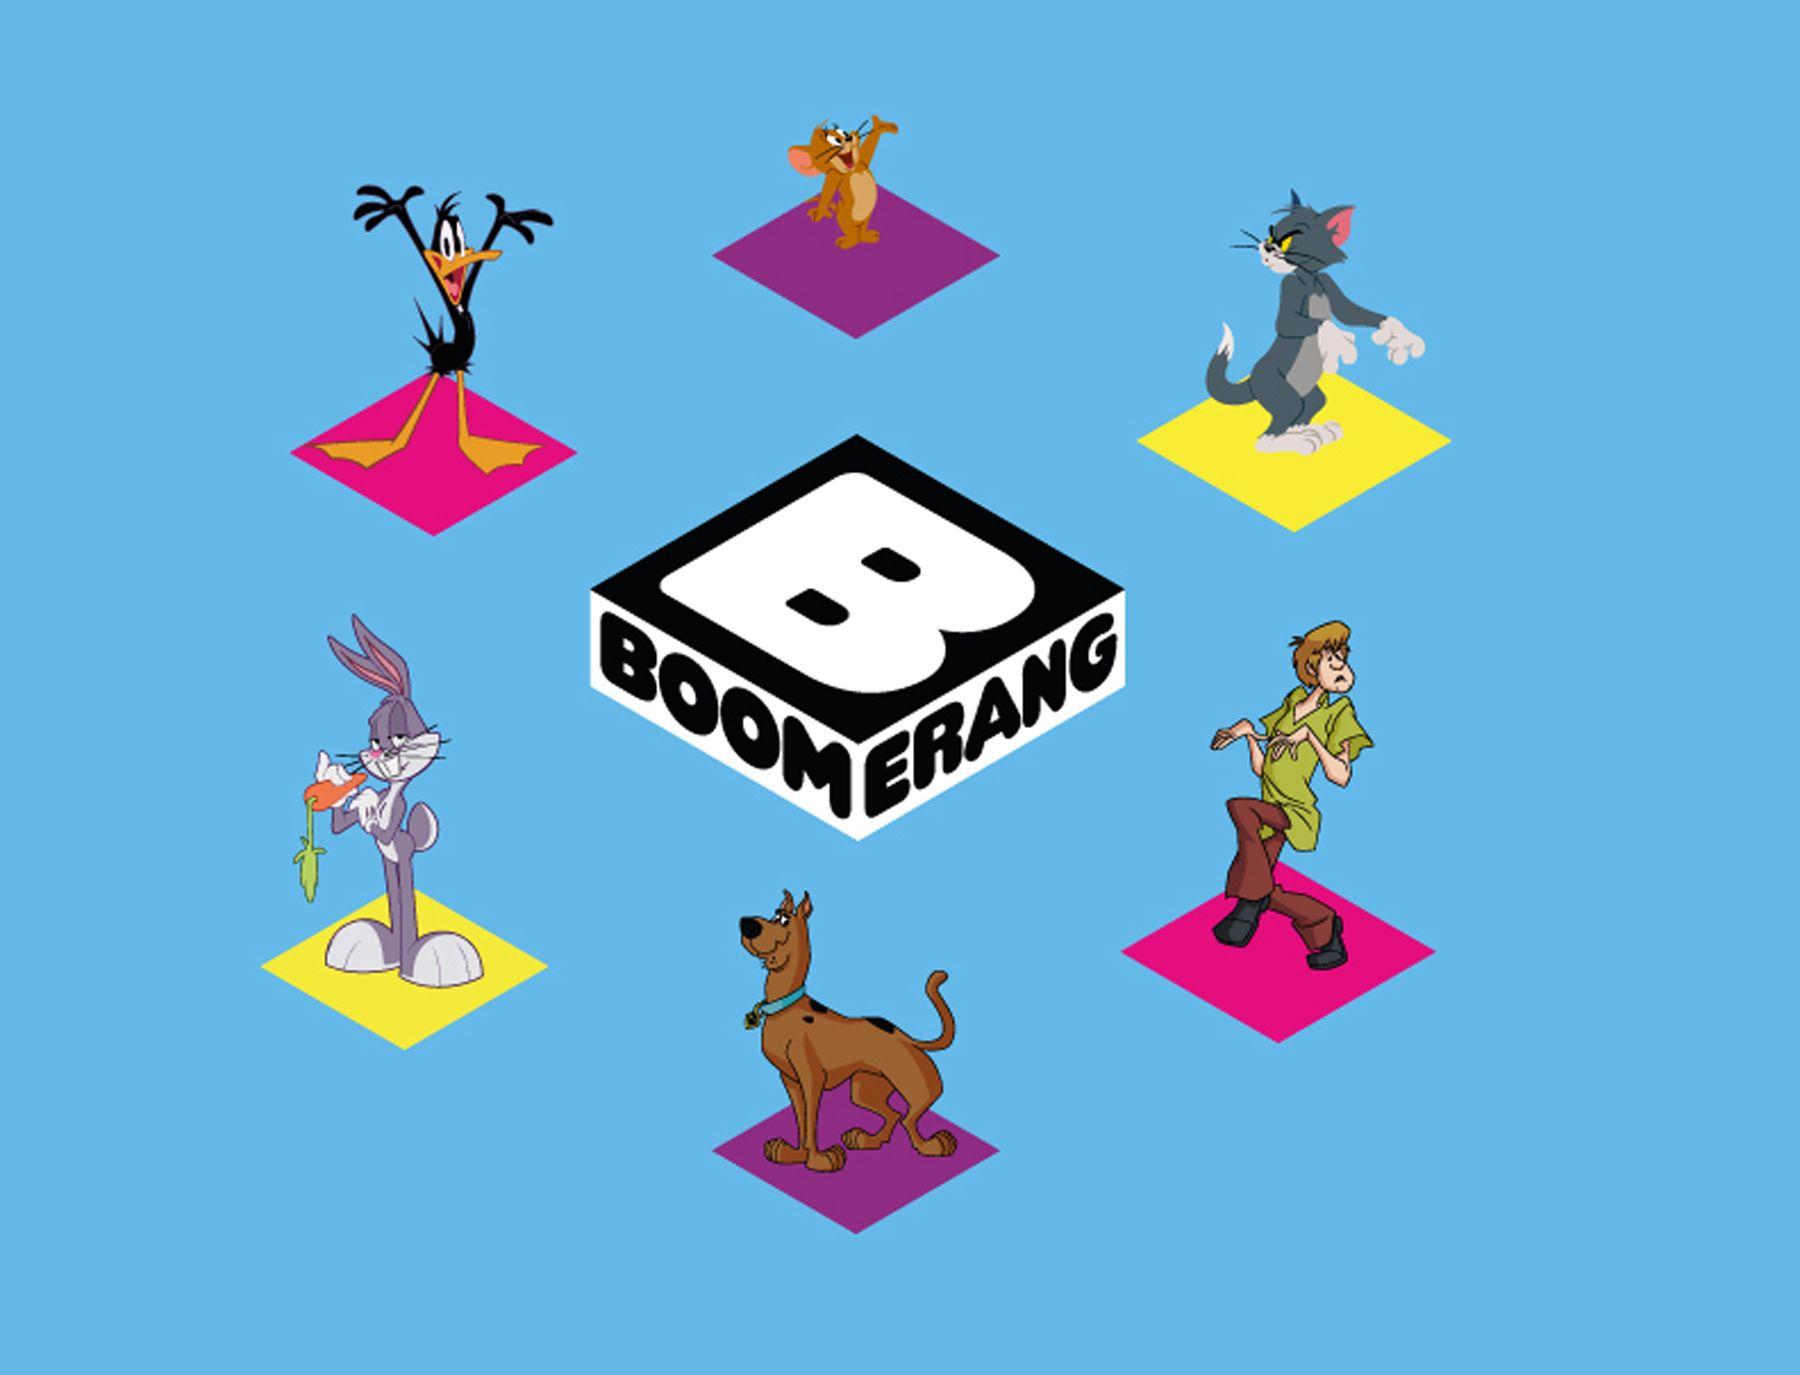 Boomerang From Cartoon Network 2015 Logo - Kidscreen Archive Boomerang lands in Korean market